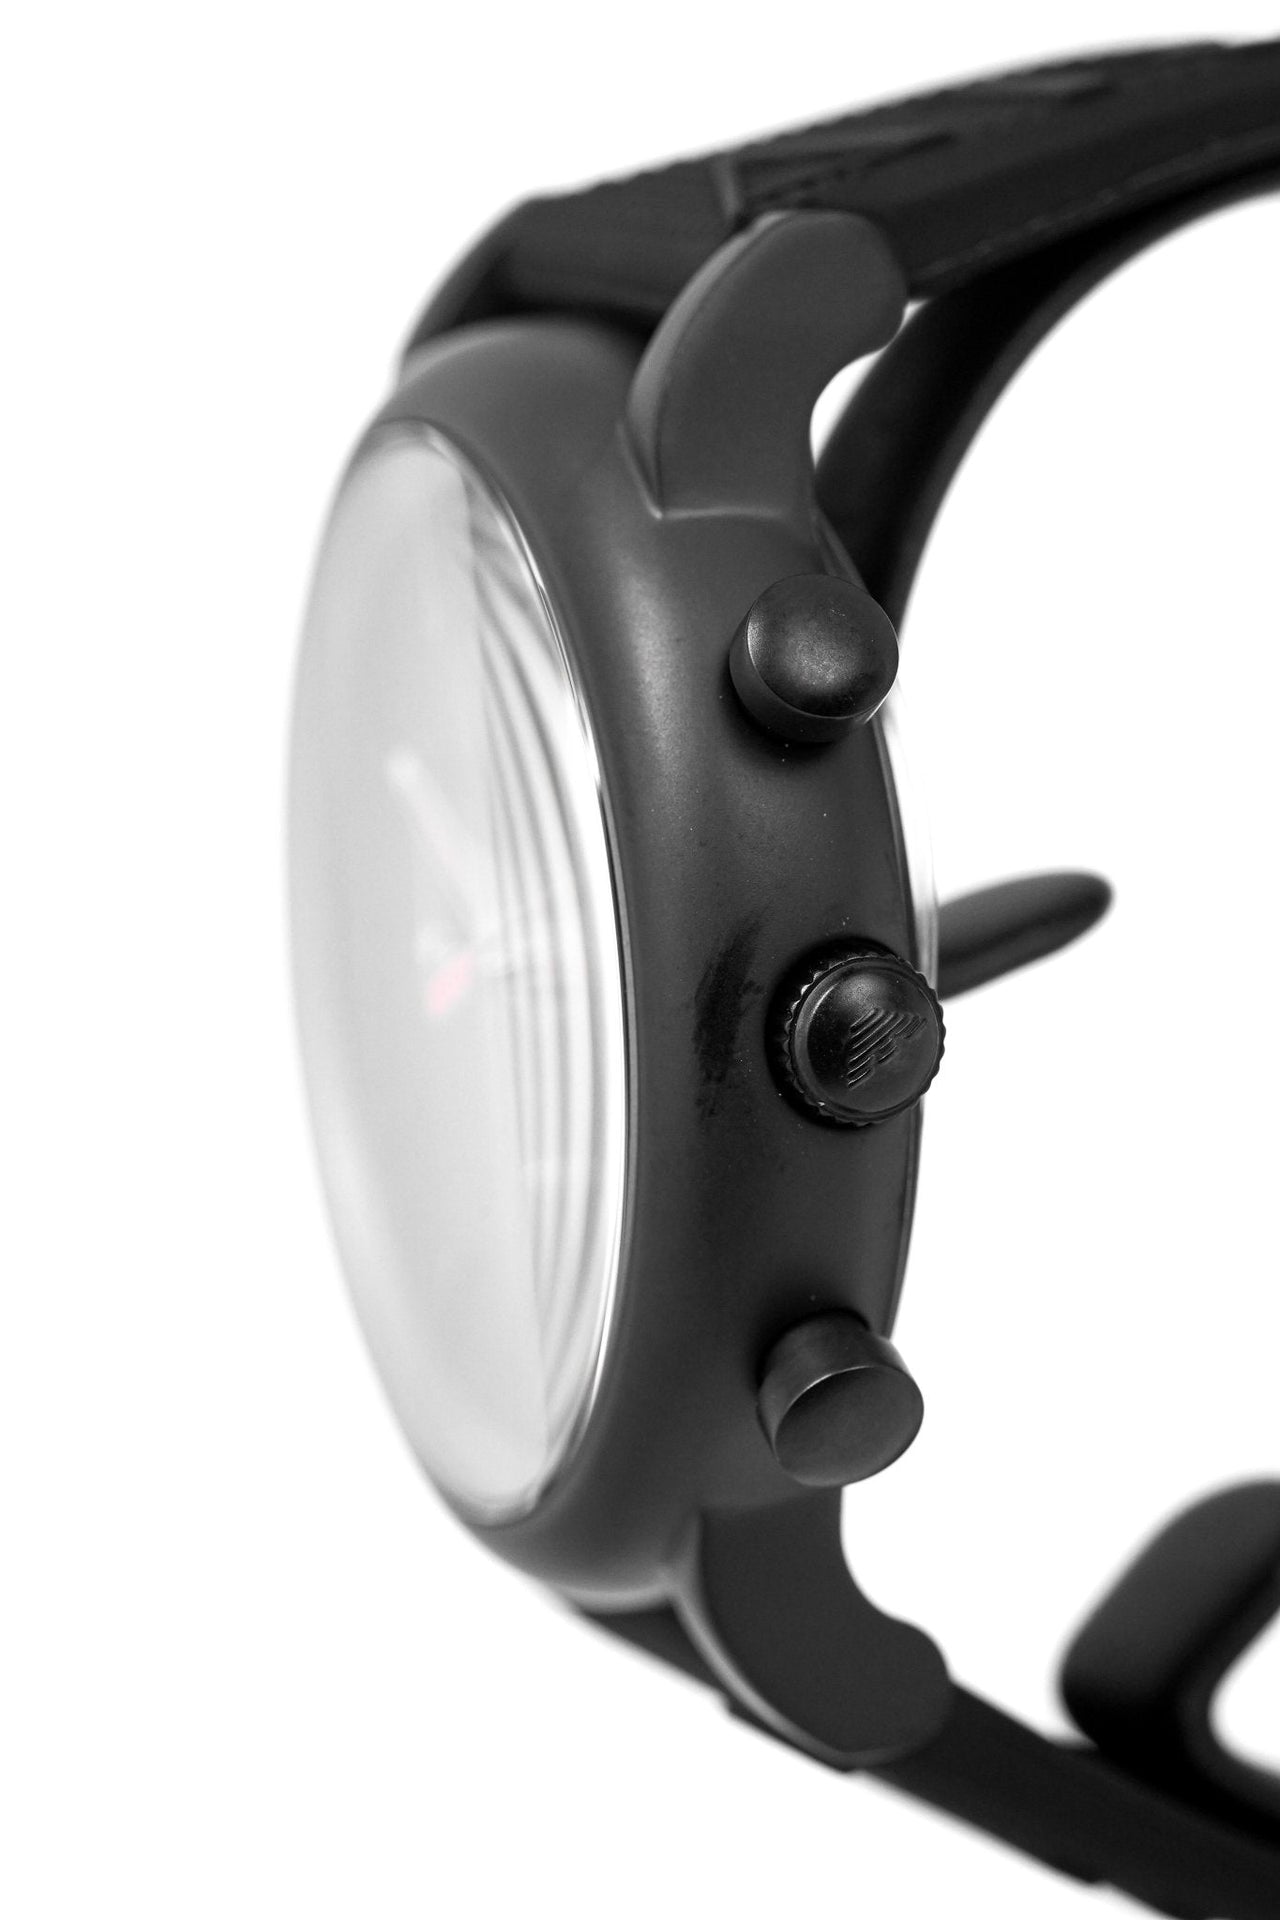 Emporio Armani Men's Luigi Chronograph Watch Black PVD AR11024 - Watches & Crystals